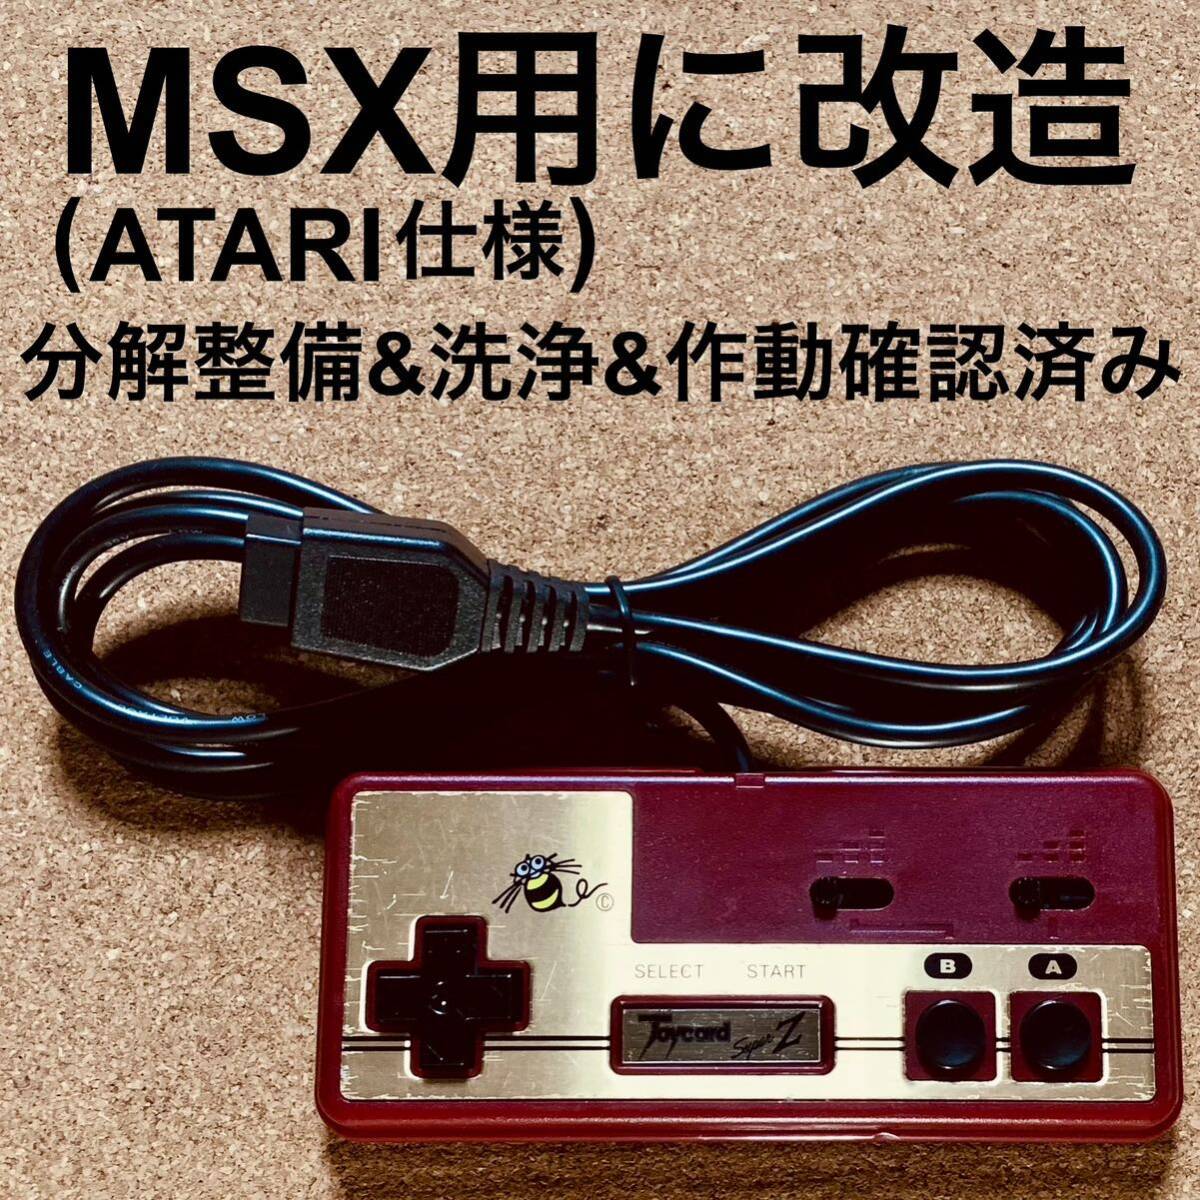 MSX用(ATARI仕様)に改造 ハドソン ジョイカードmkⅡ 分解整備&洗浄&作動確認済みの画像1